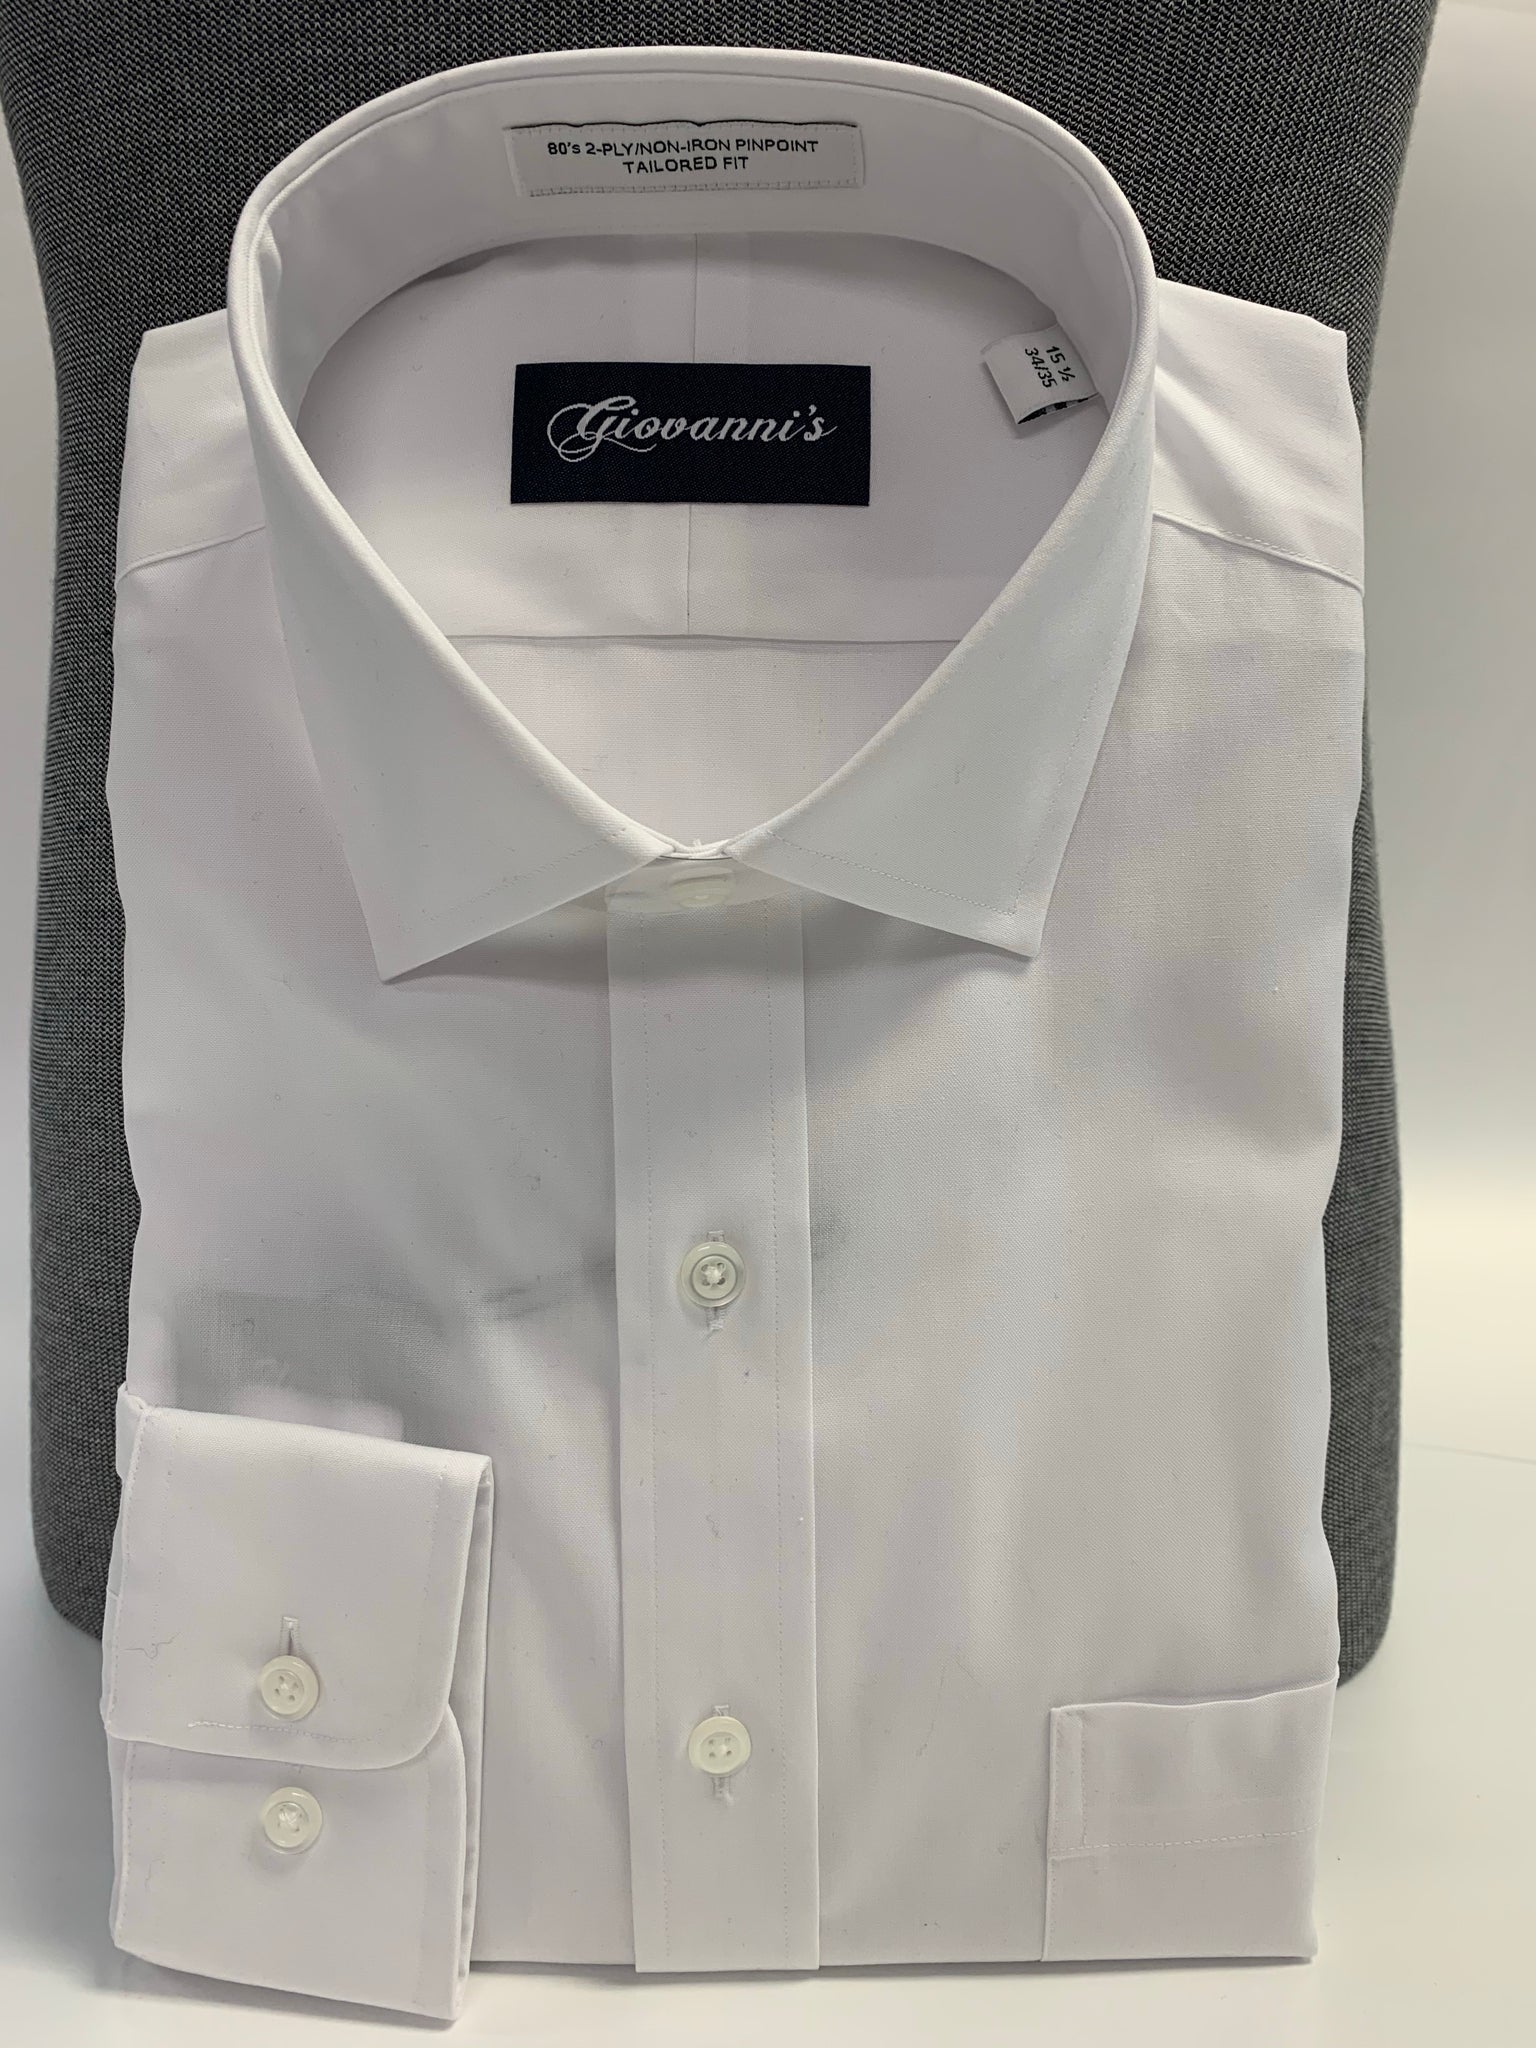 Giovanni's Slim Fit Modified Spread Premium Pinpoint Dress Shirt - White-01